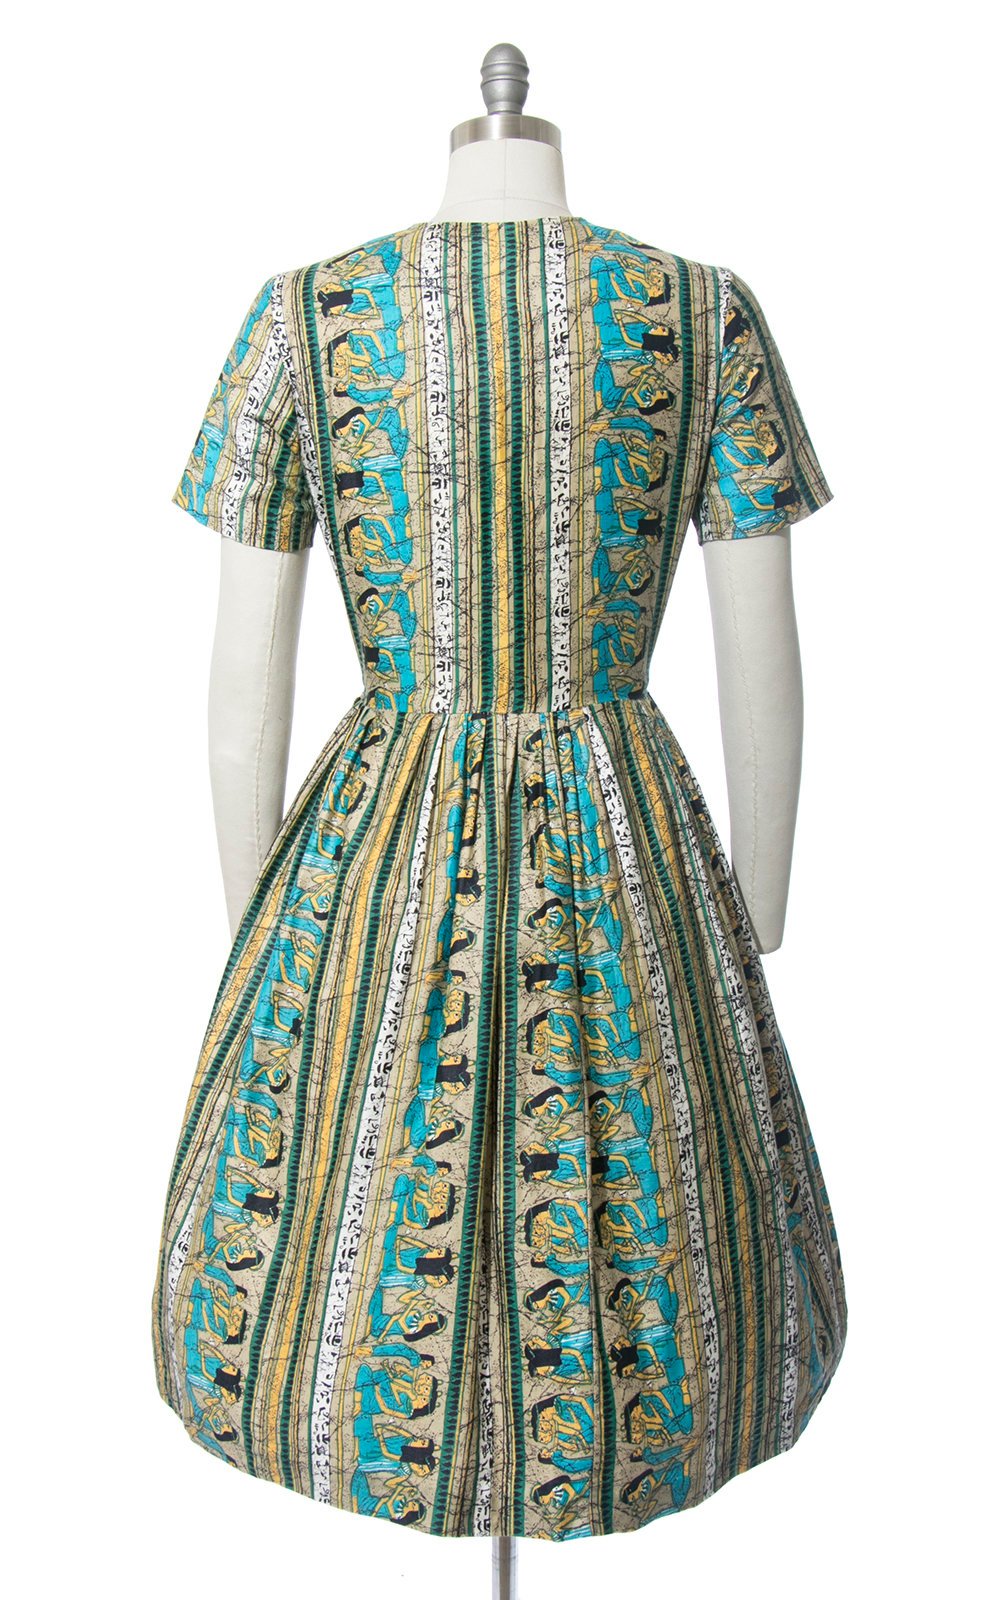 Vintage 1950s 1960s Dress | 50s 60s Egyptian Novelty Print Cotton Shirt Dress Full Skirt Shirtwaist Day Dress (medium/large)